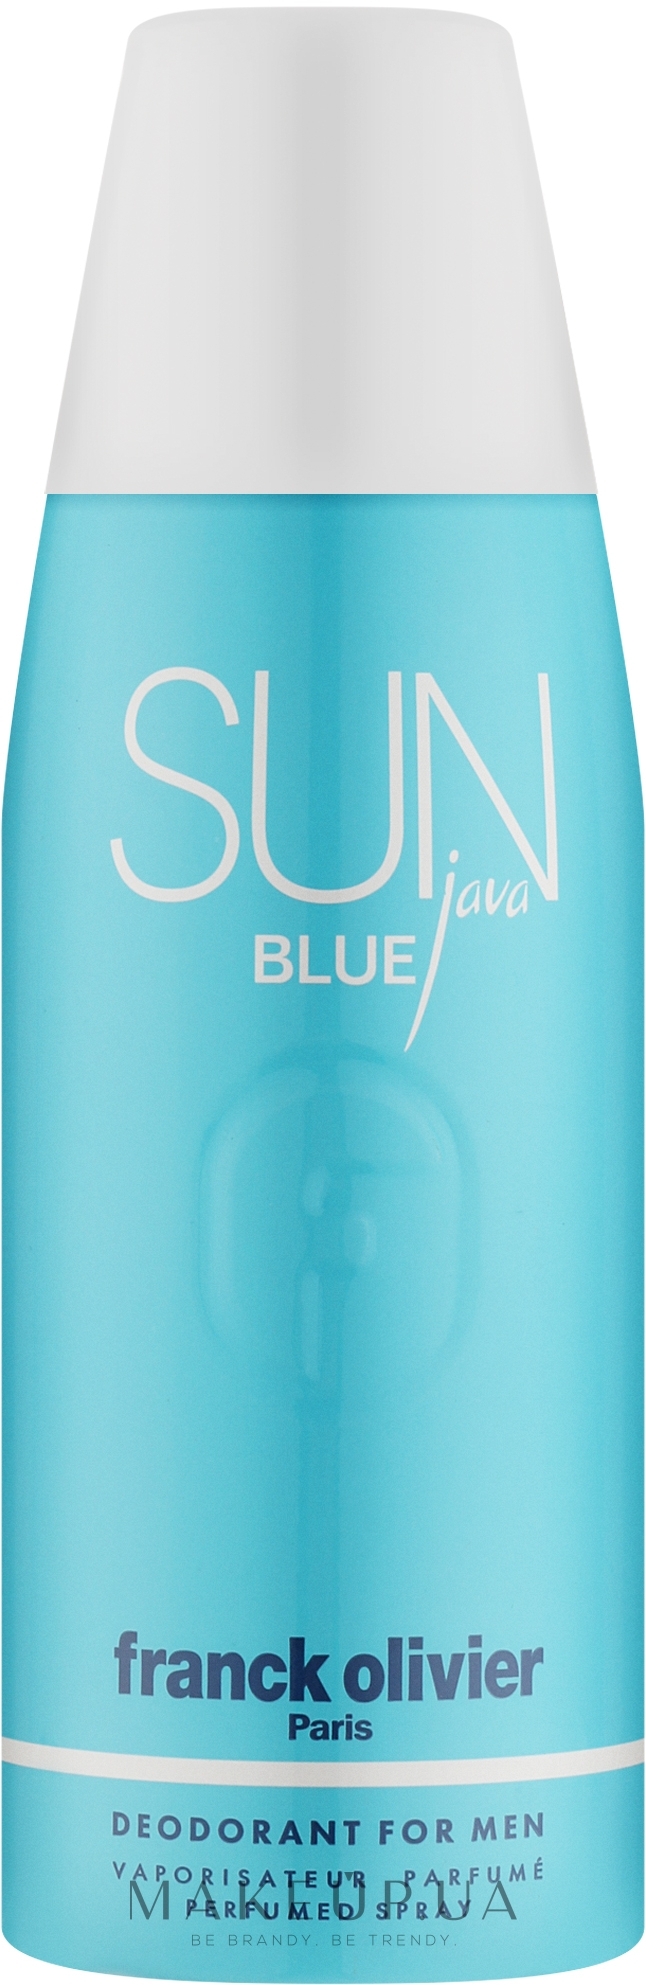 Franck Olivier Sun Java Blue - Дезодорант — фото 250ml